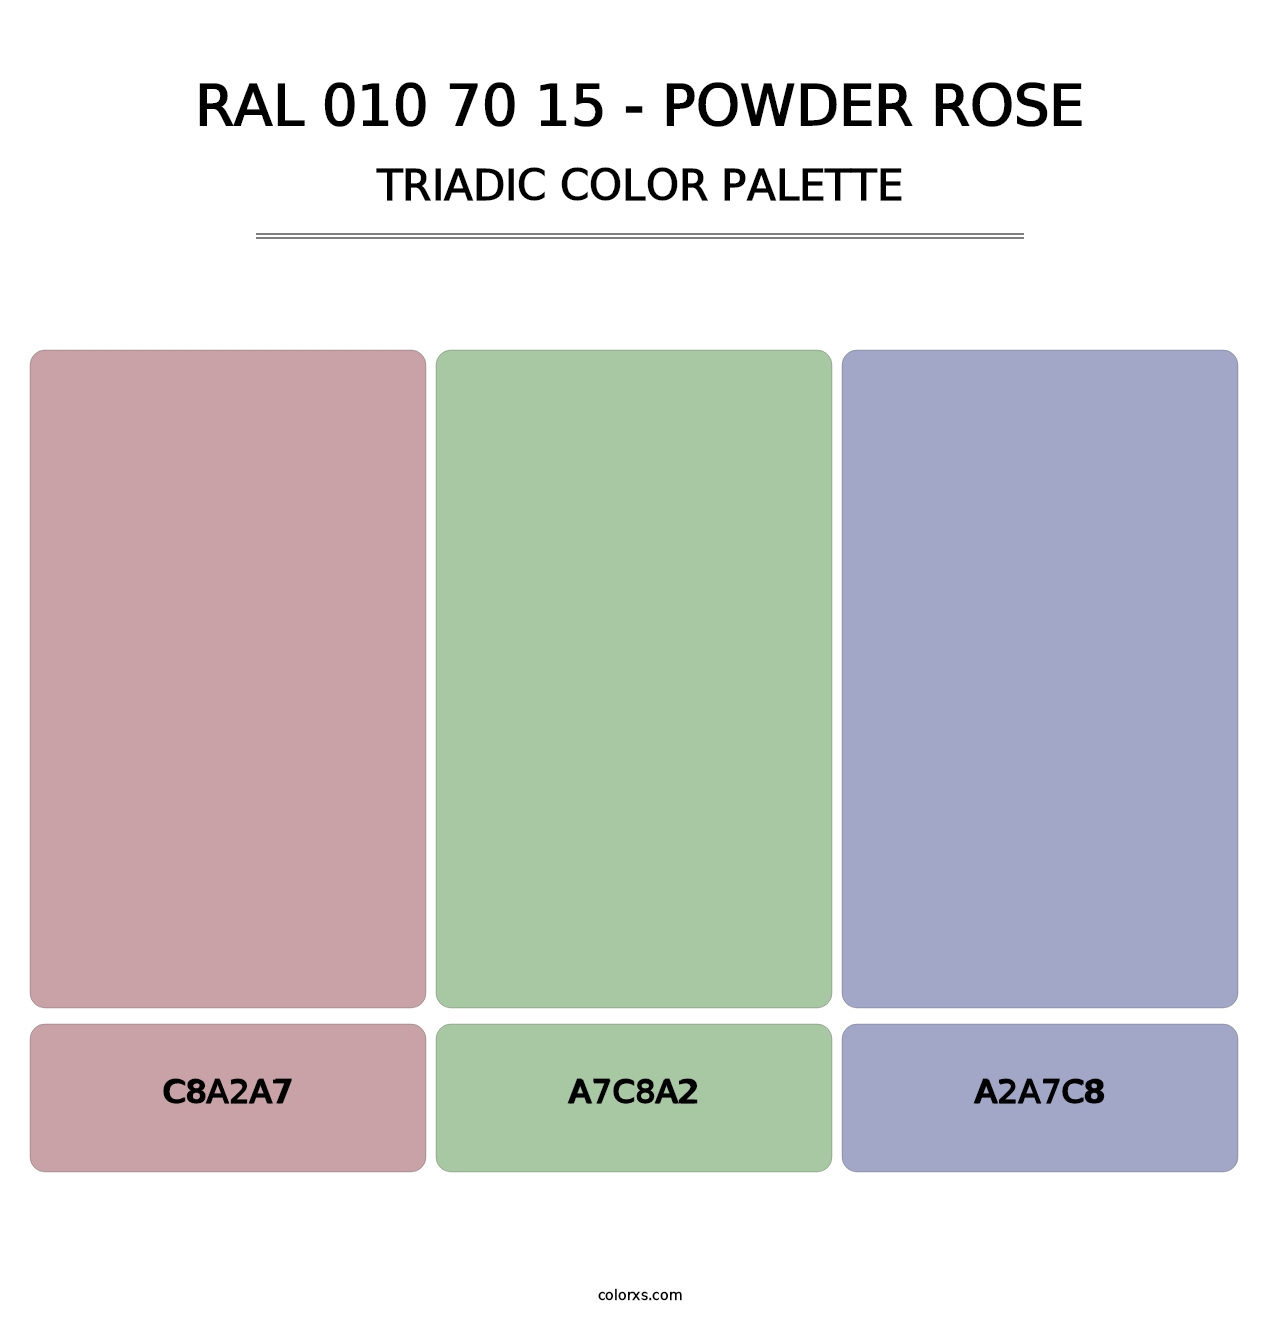 RAL 010 70 15 - Powder Rose - Triadic Color Palette